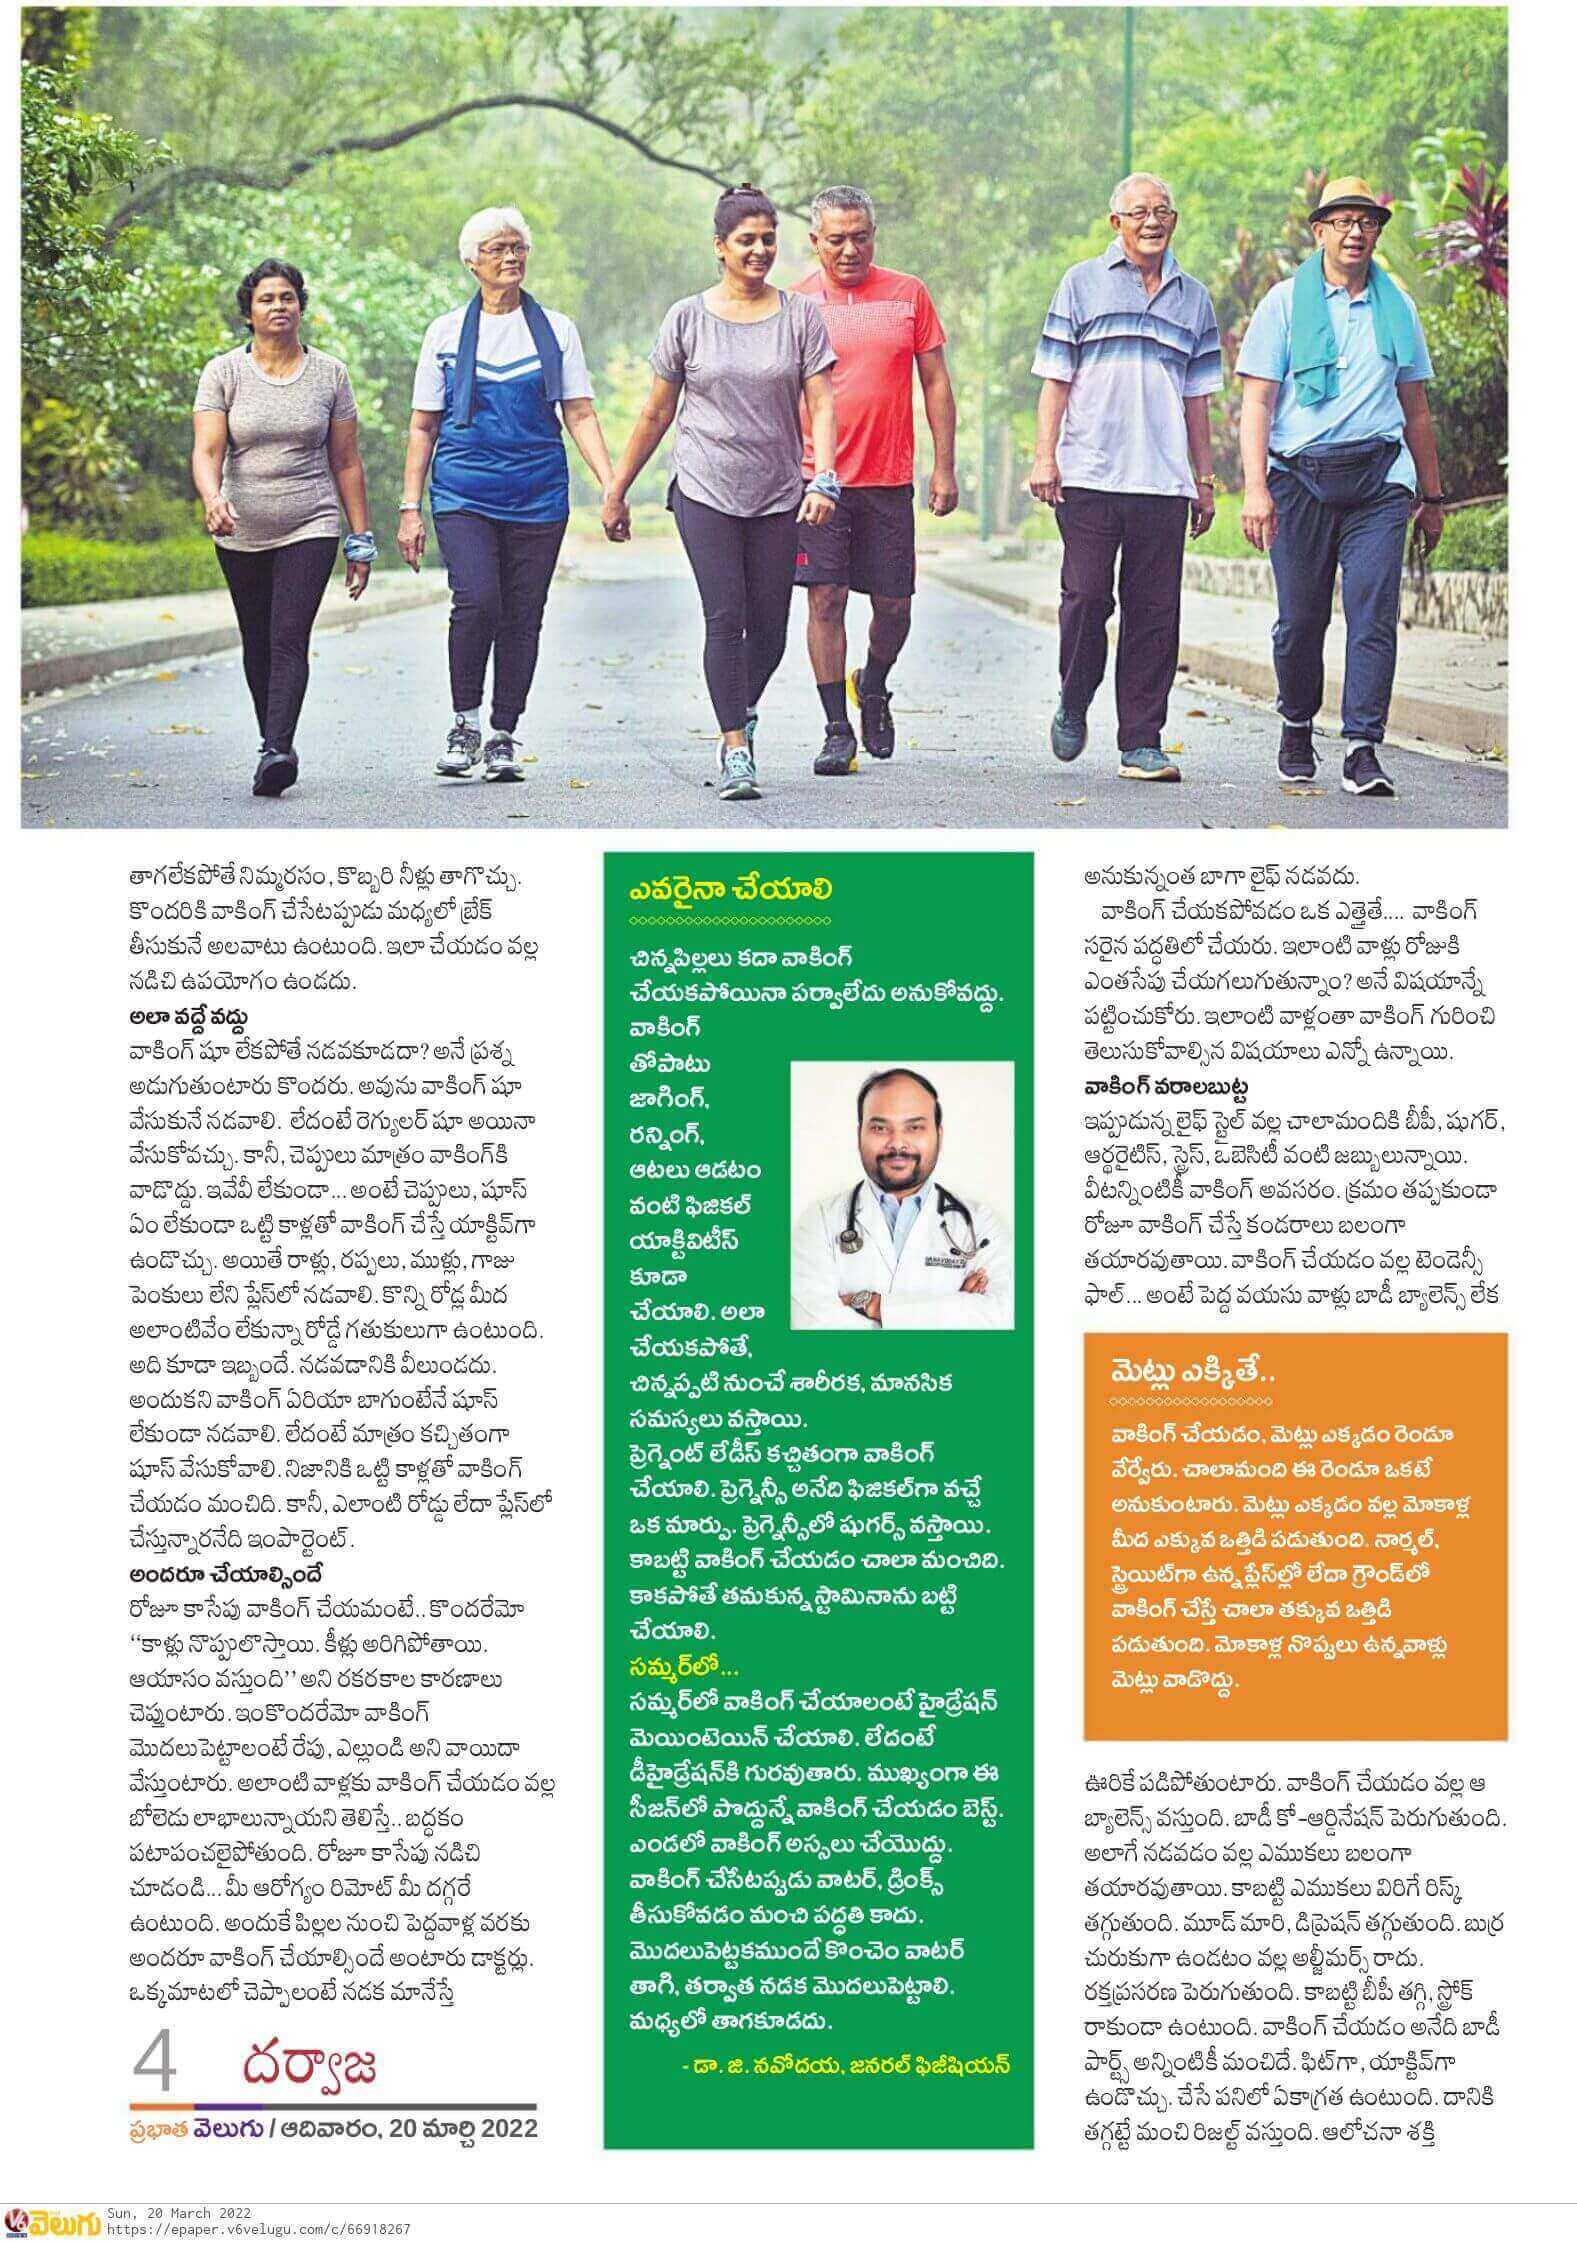 Article on Walking 